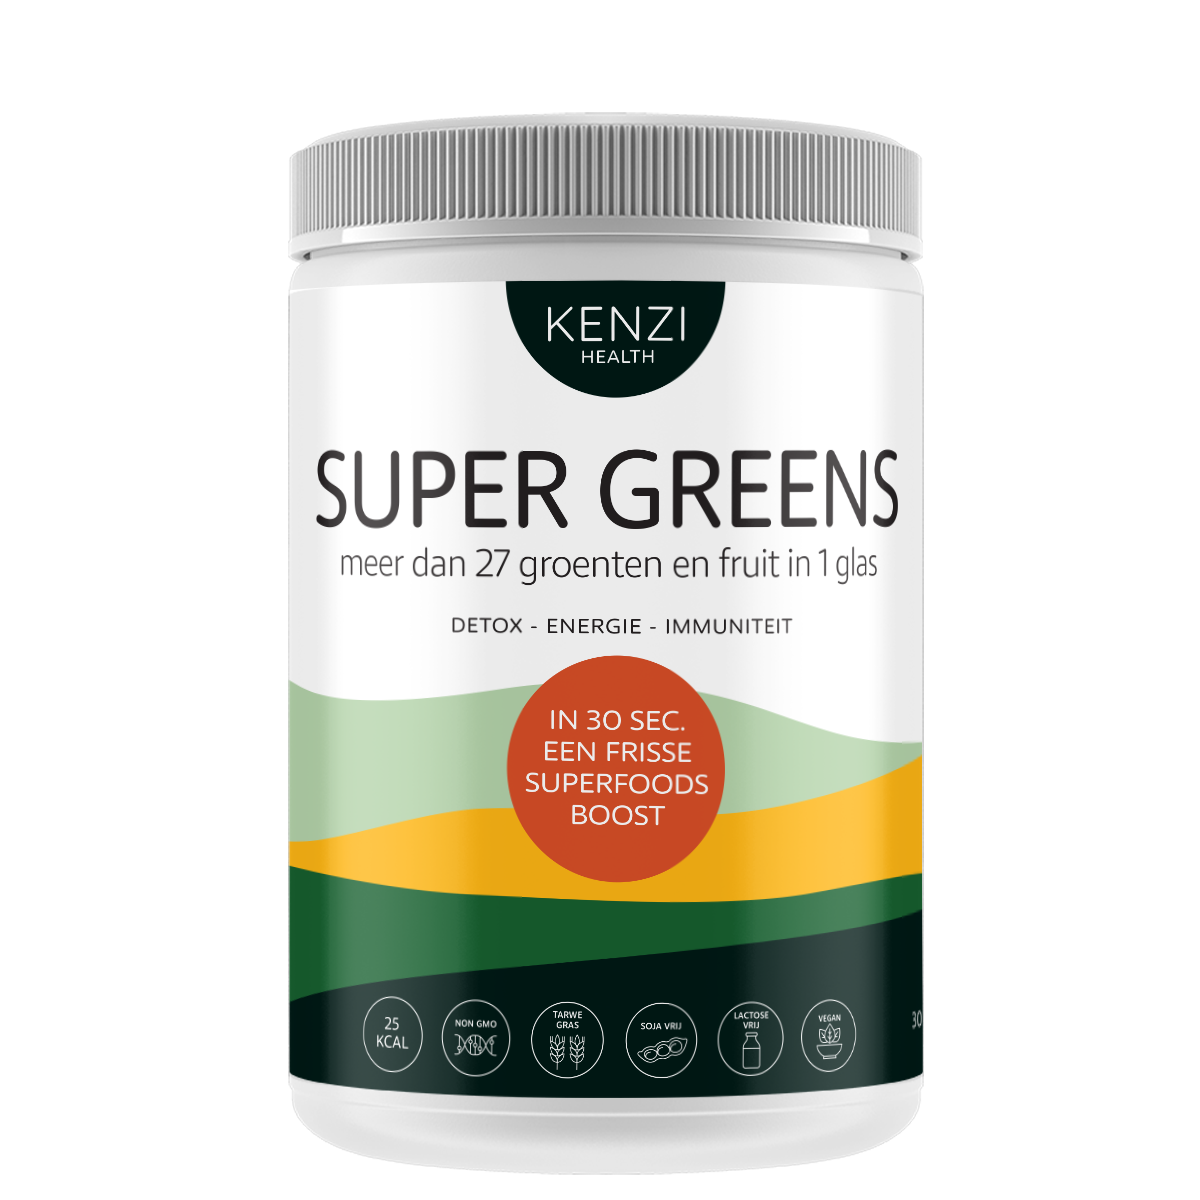 lof decaan Ruwe olie Kenzi Super Greens (superfood groentepoeder) kopen - Spiruella.be